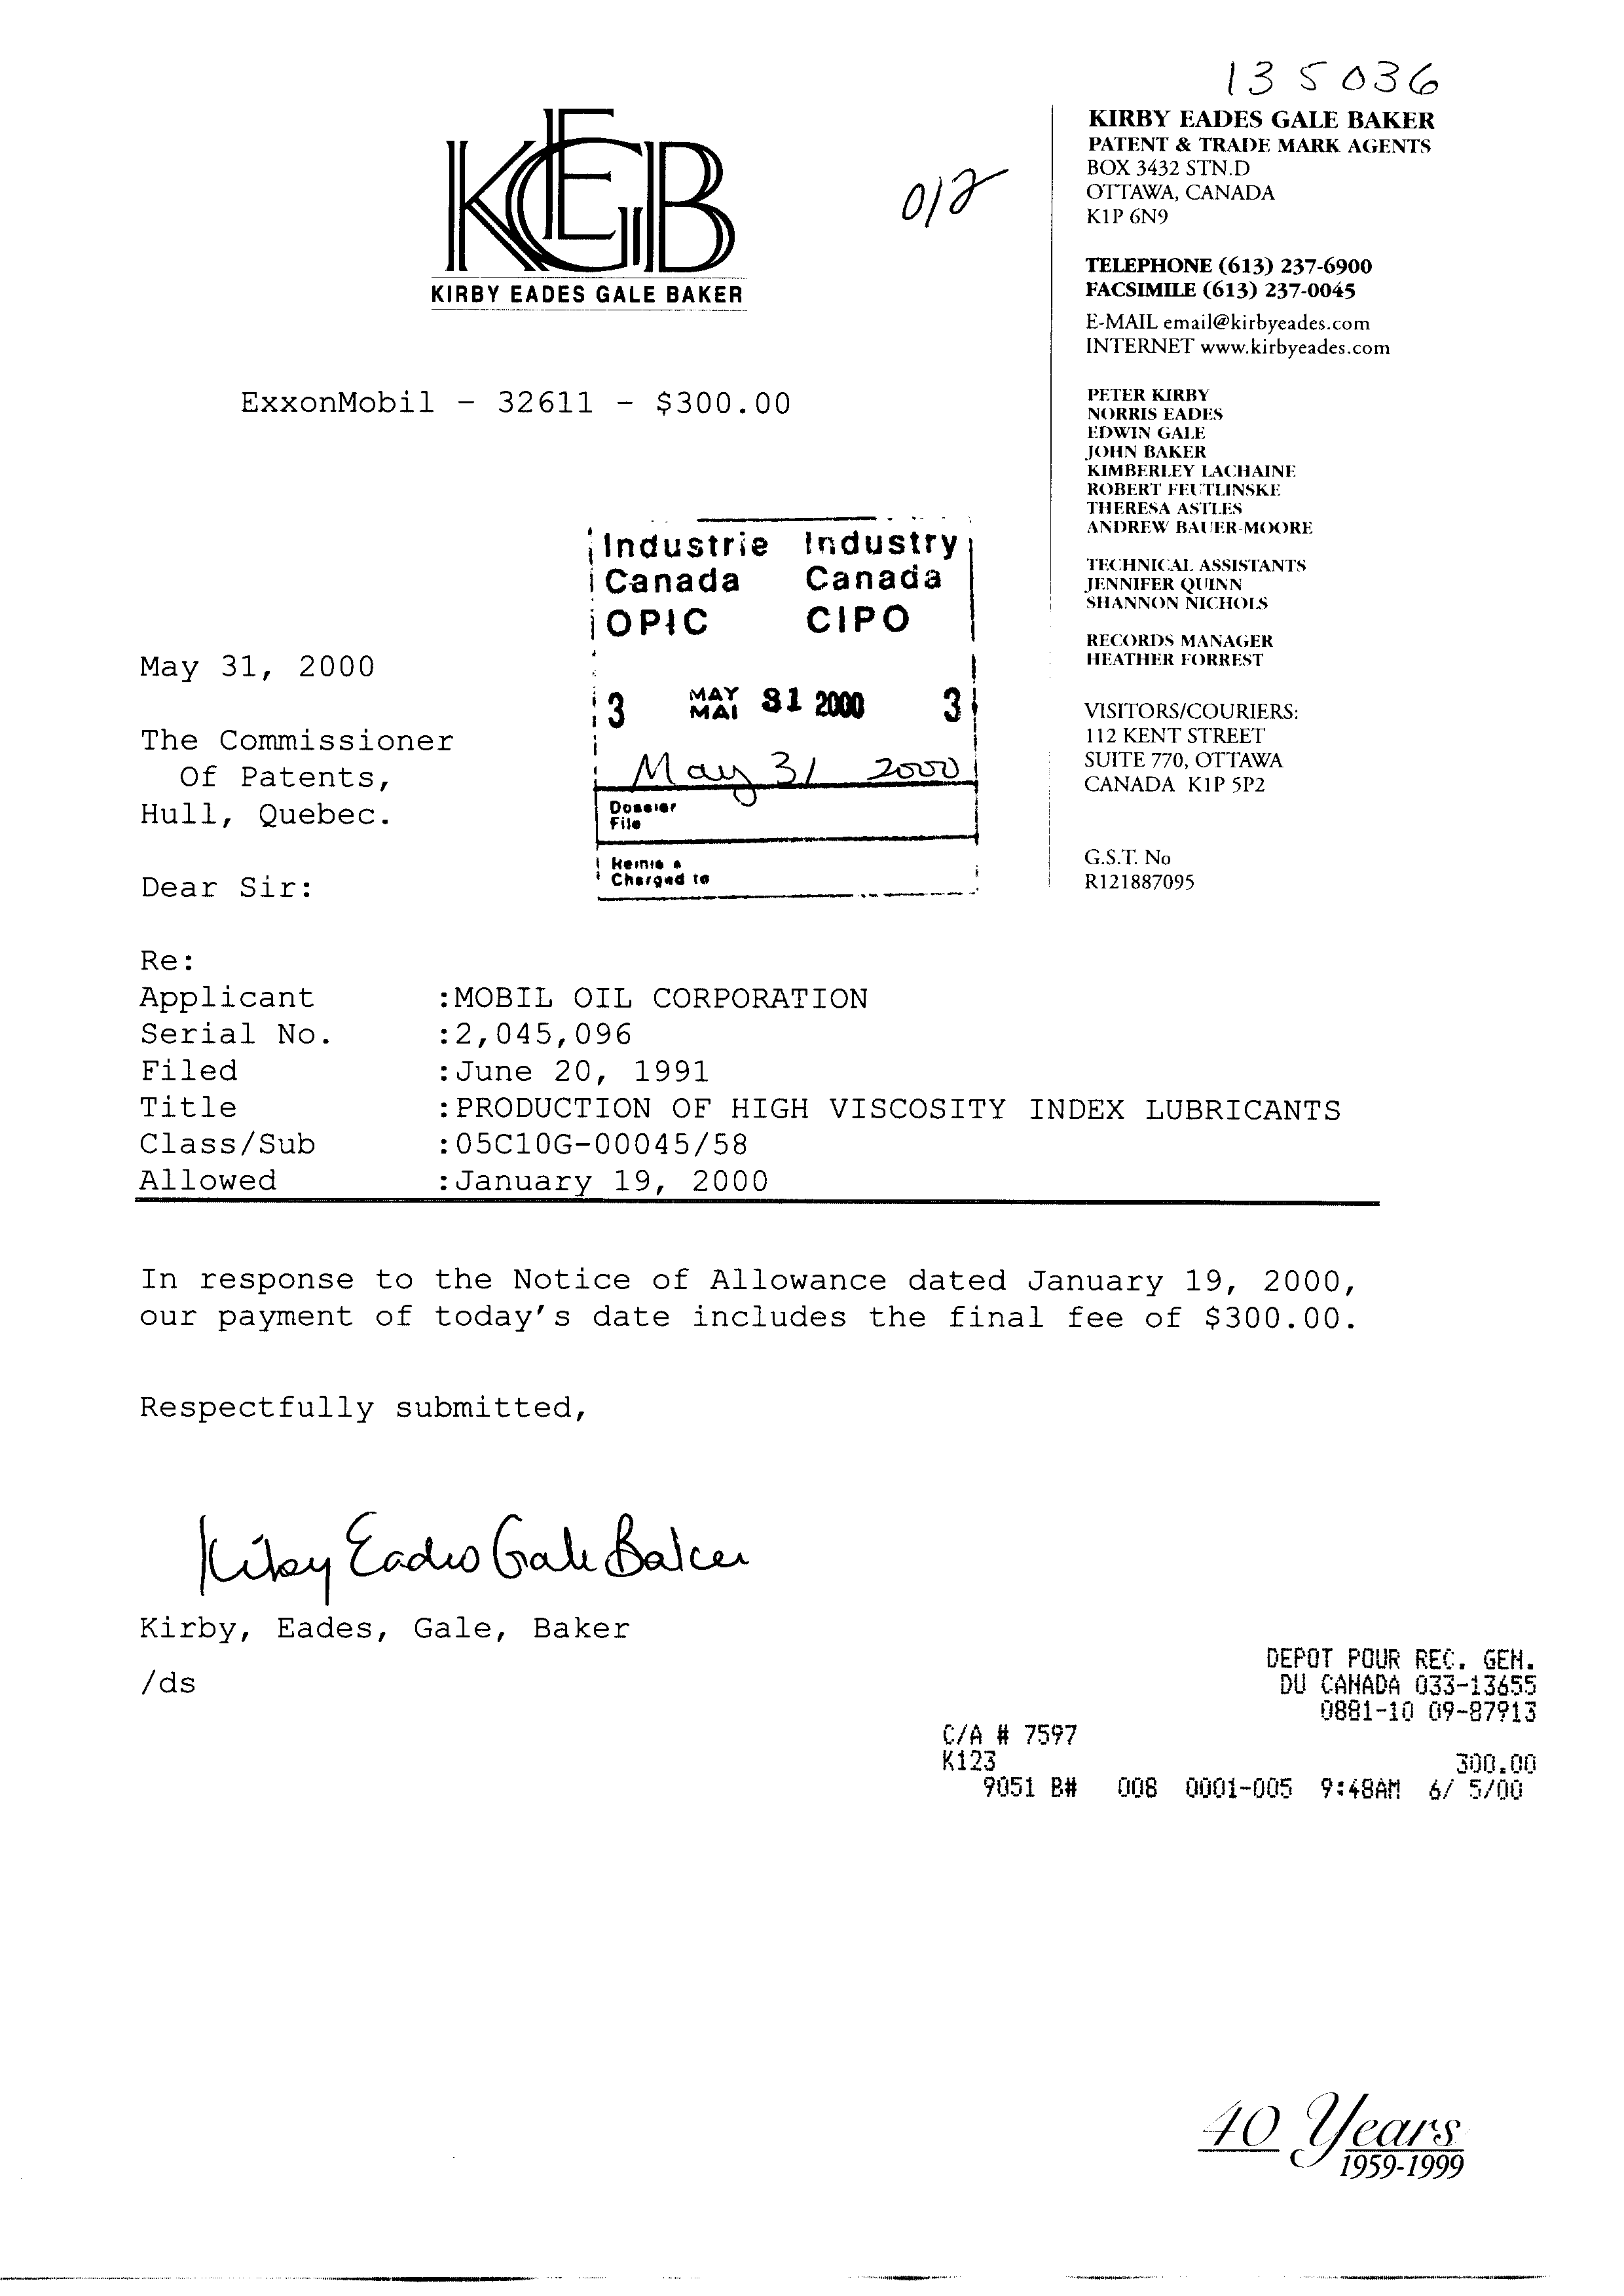 Canadian Patent Document 2045096. Correspondence 20000531. Image 1 of 1